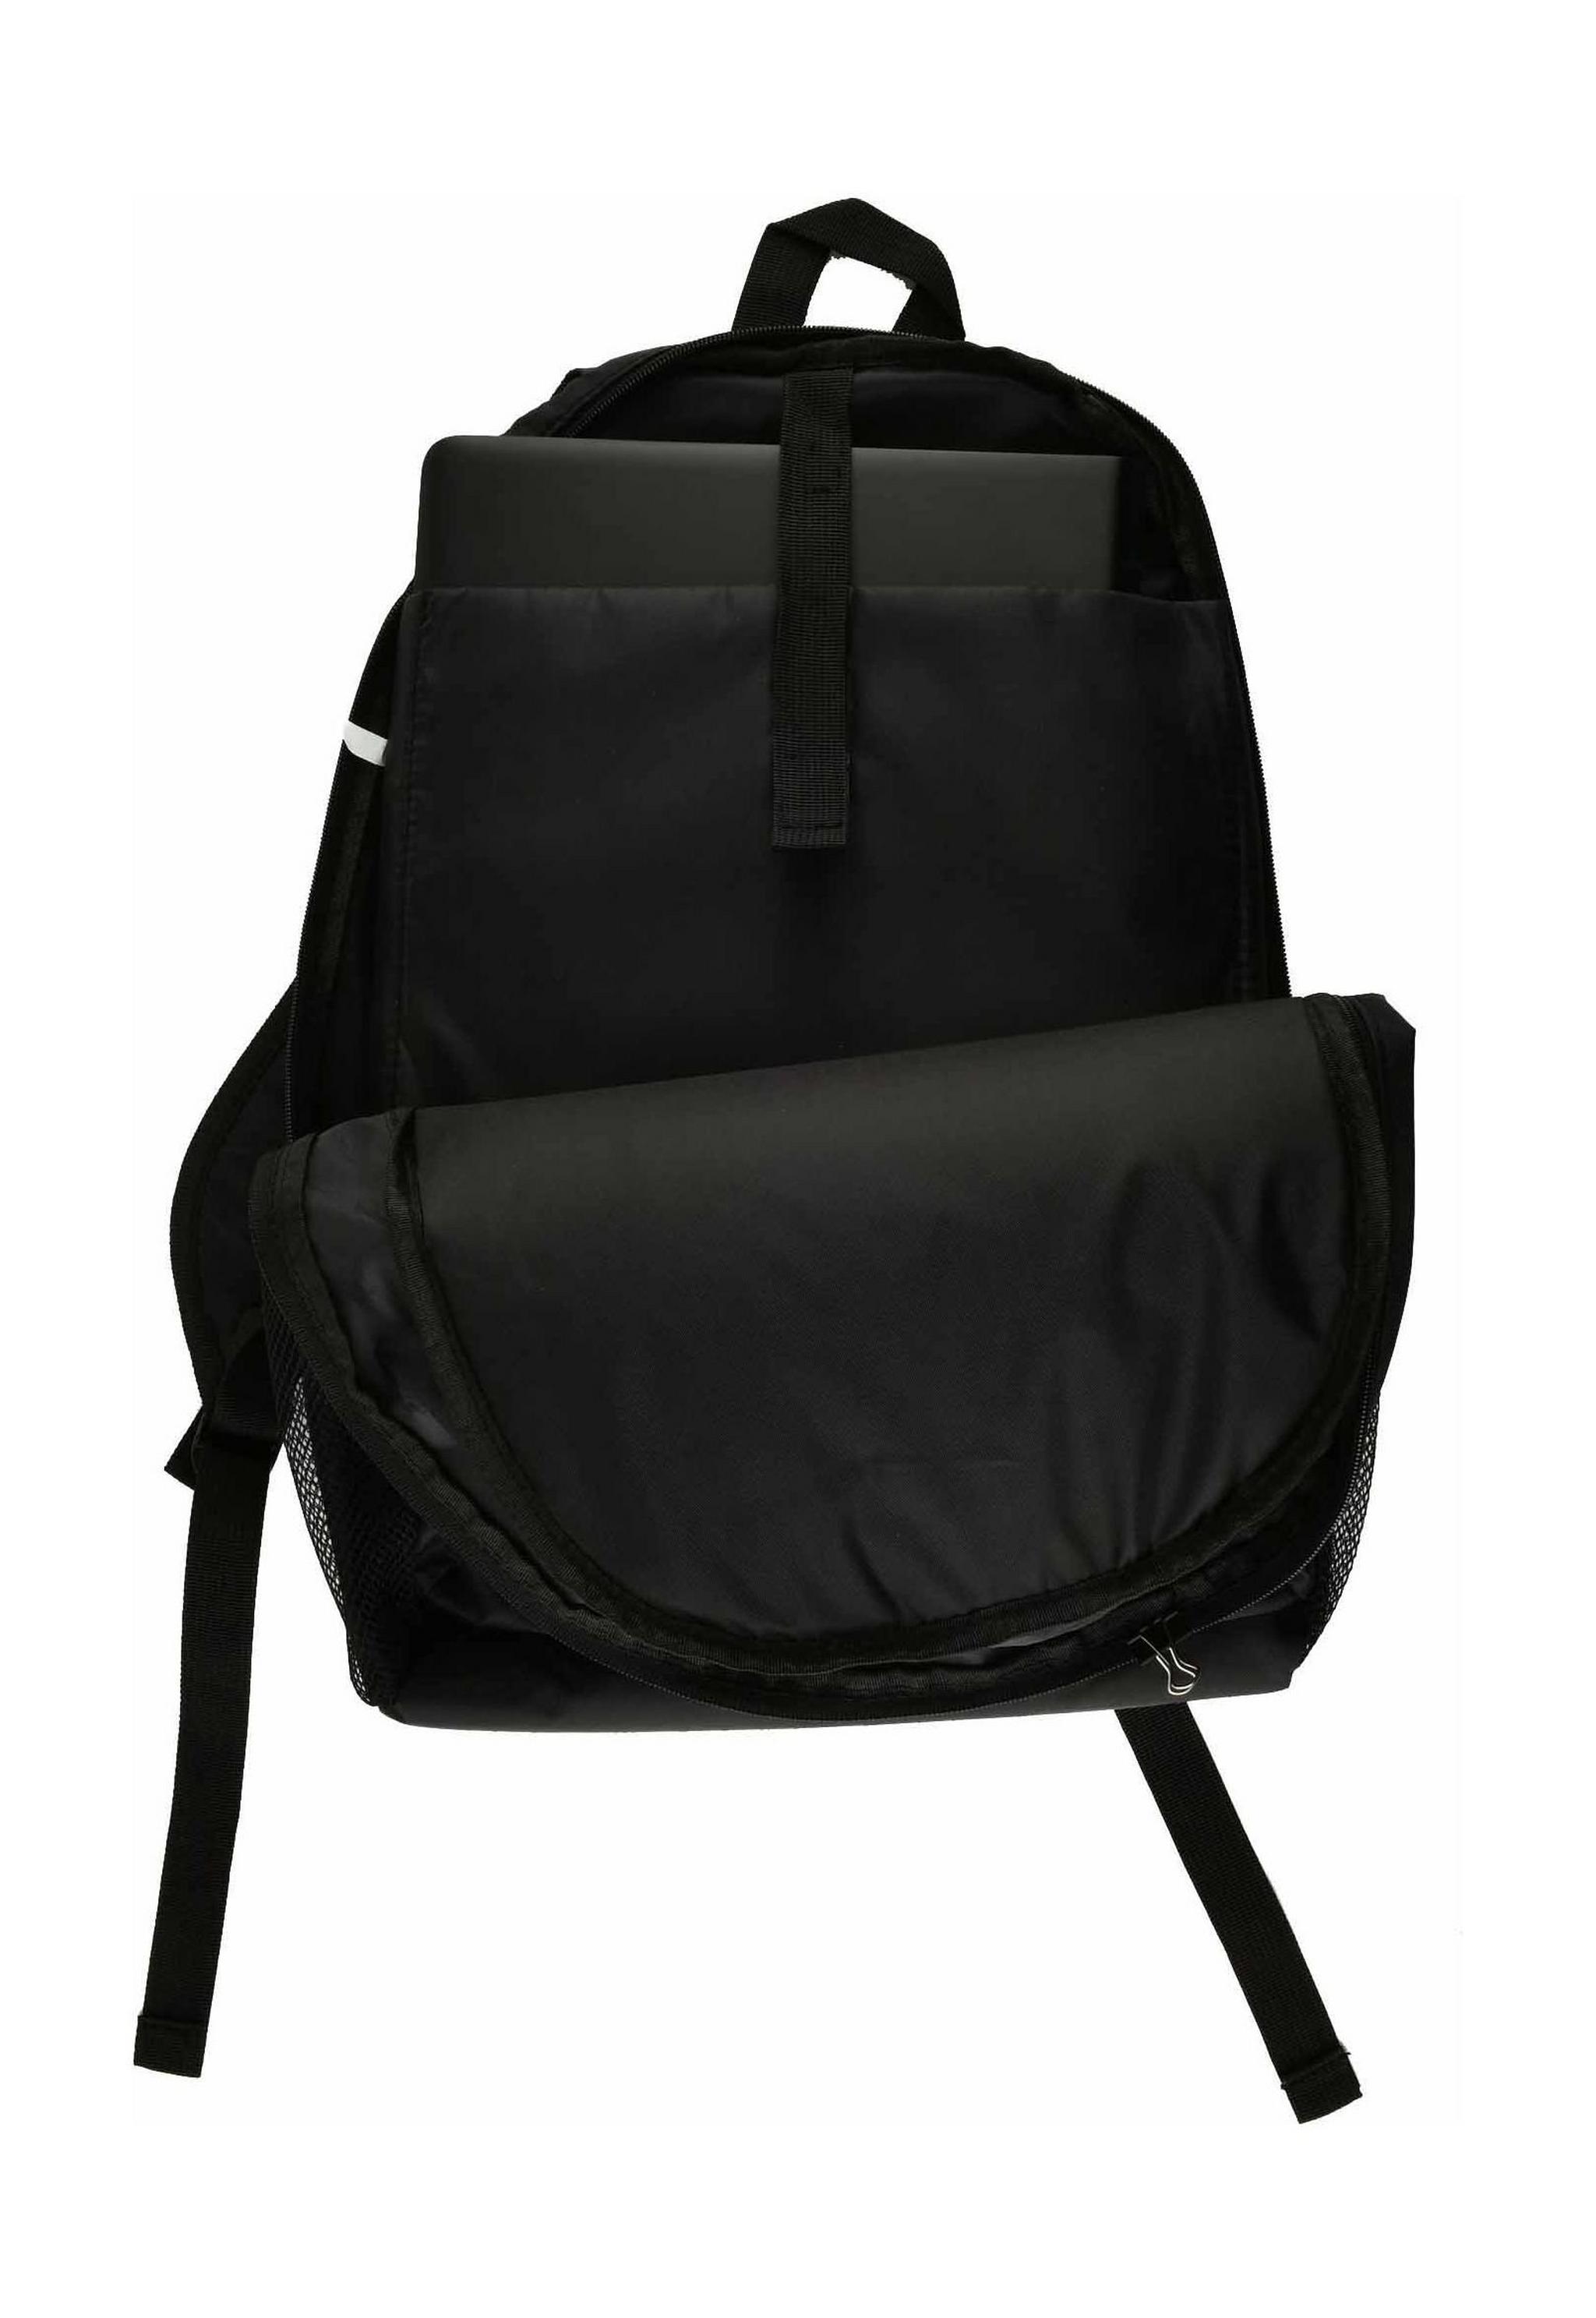 Xcell Backpack For Laptop 15.6-inch (BG-200) - Black